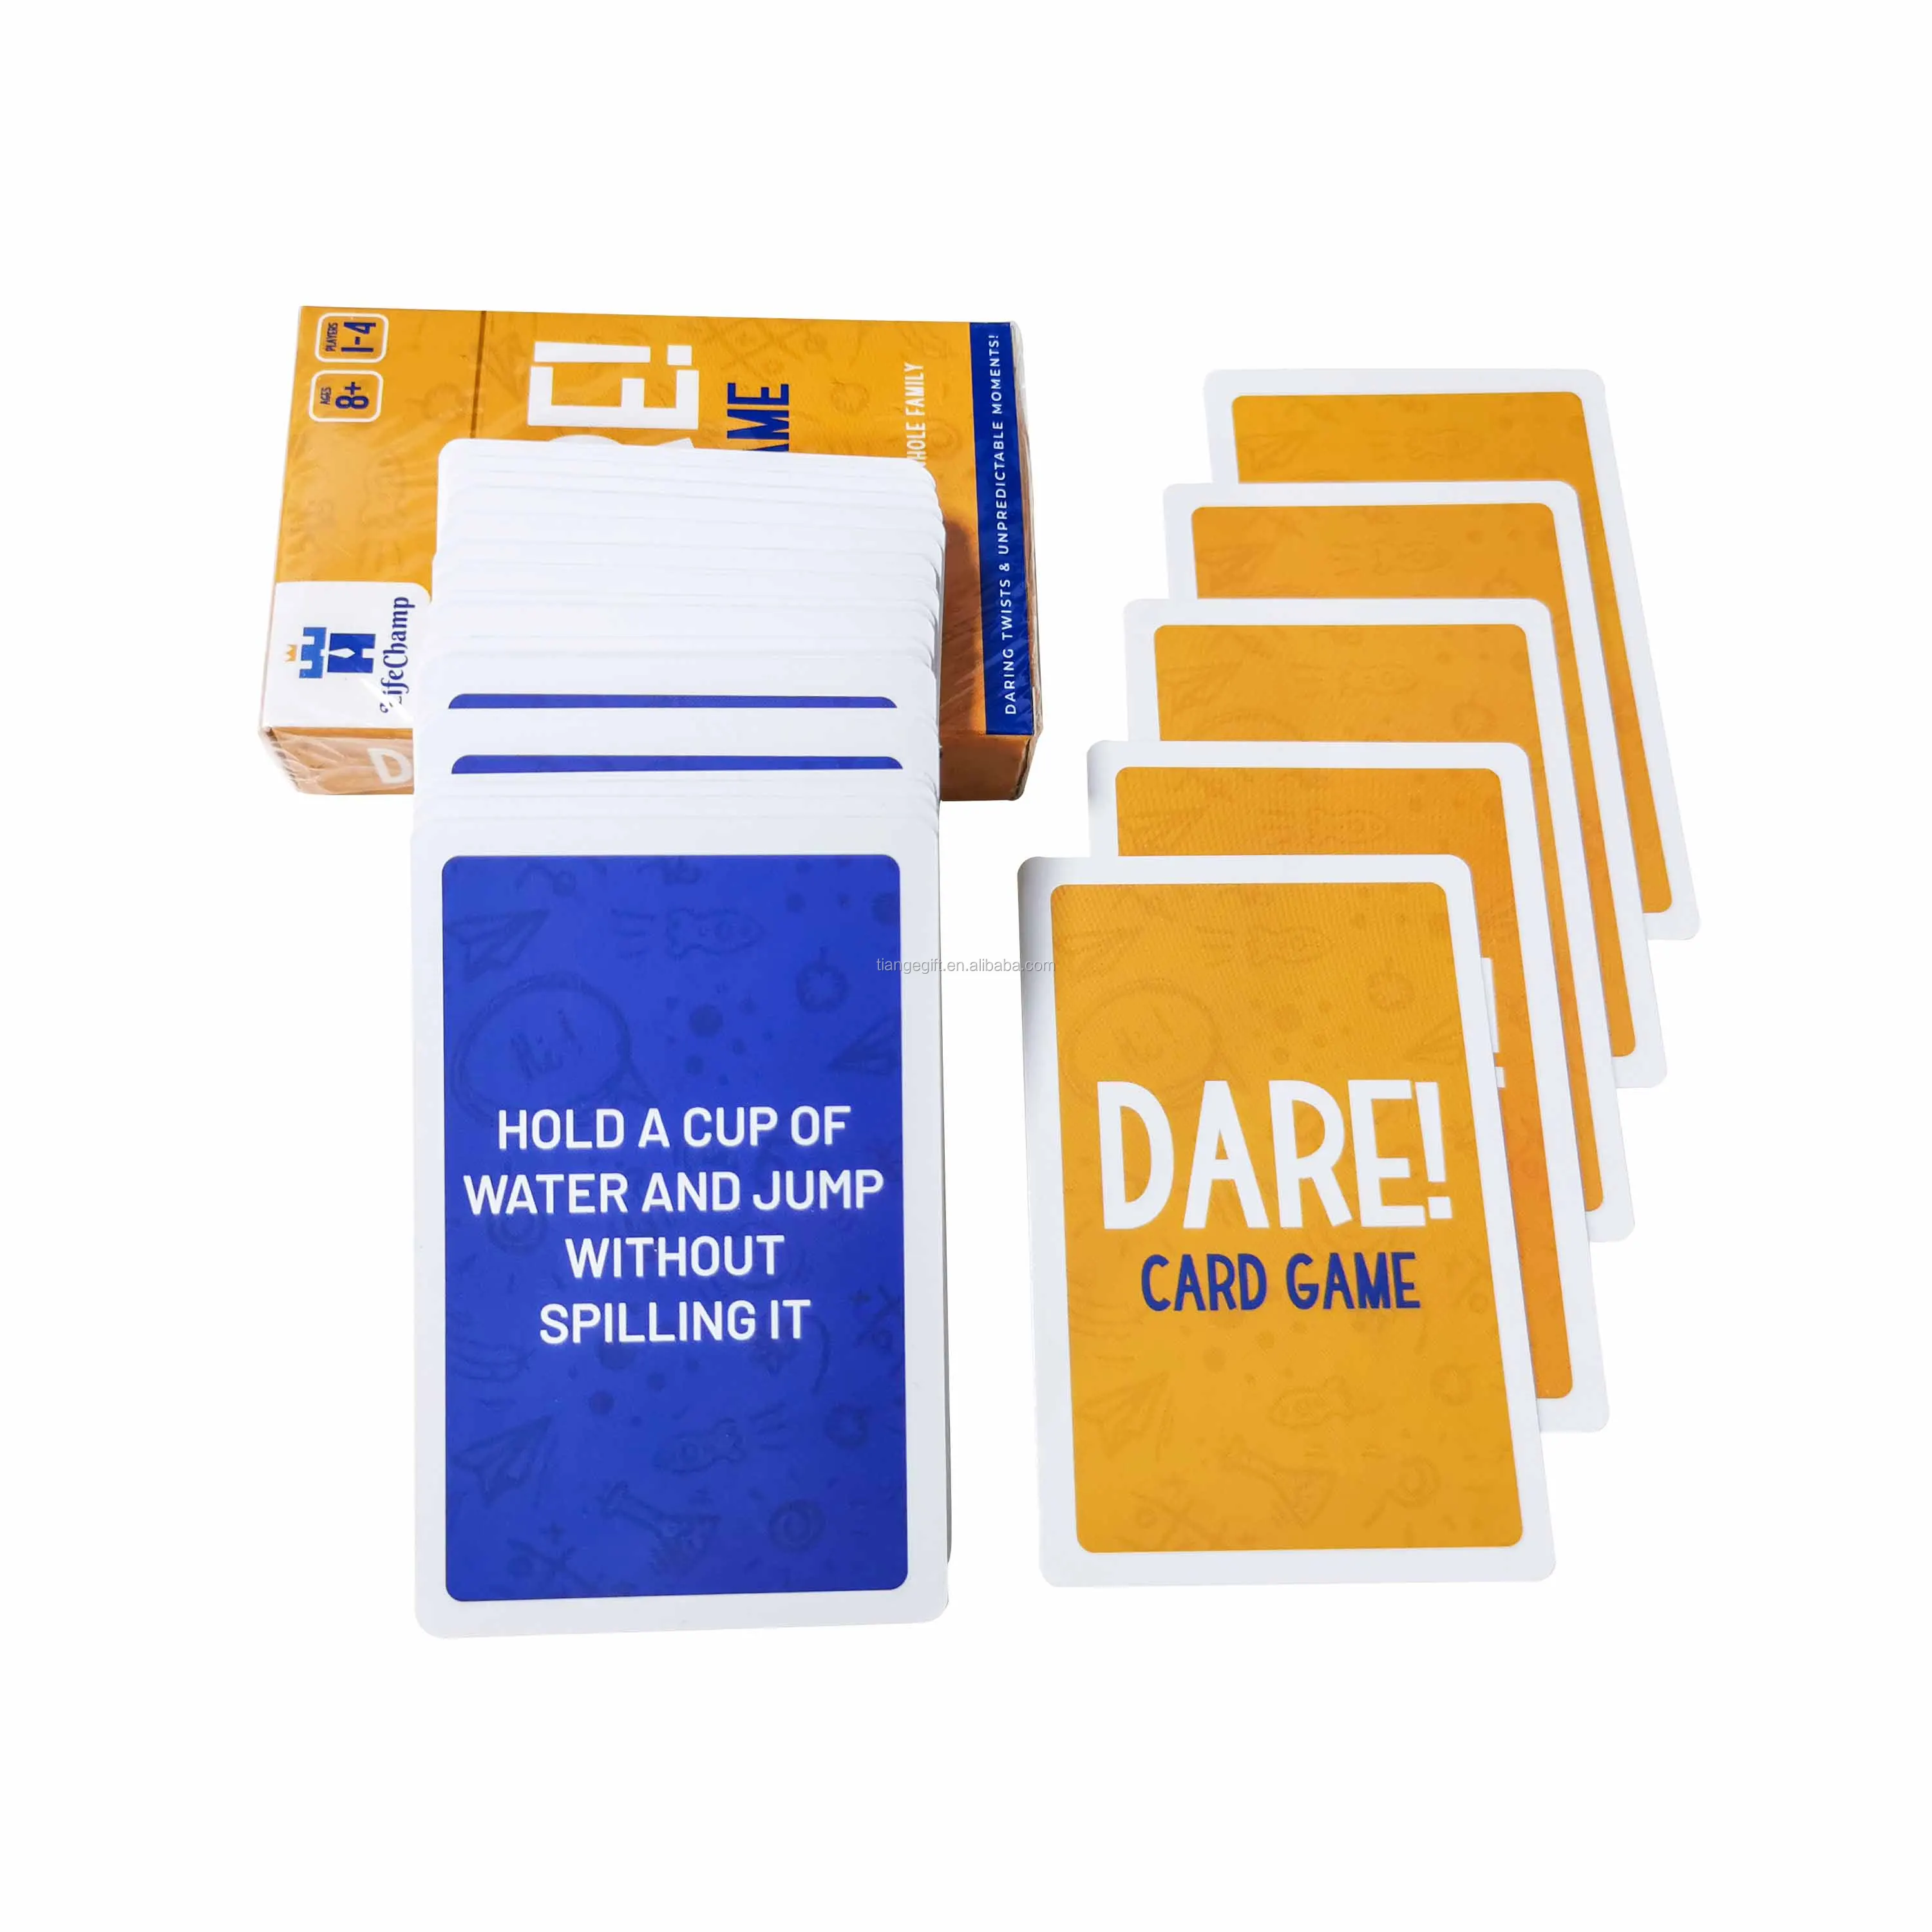 
custom orange party dare card games for family 